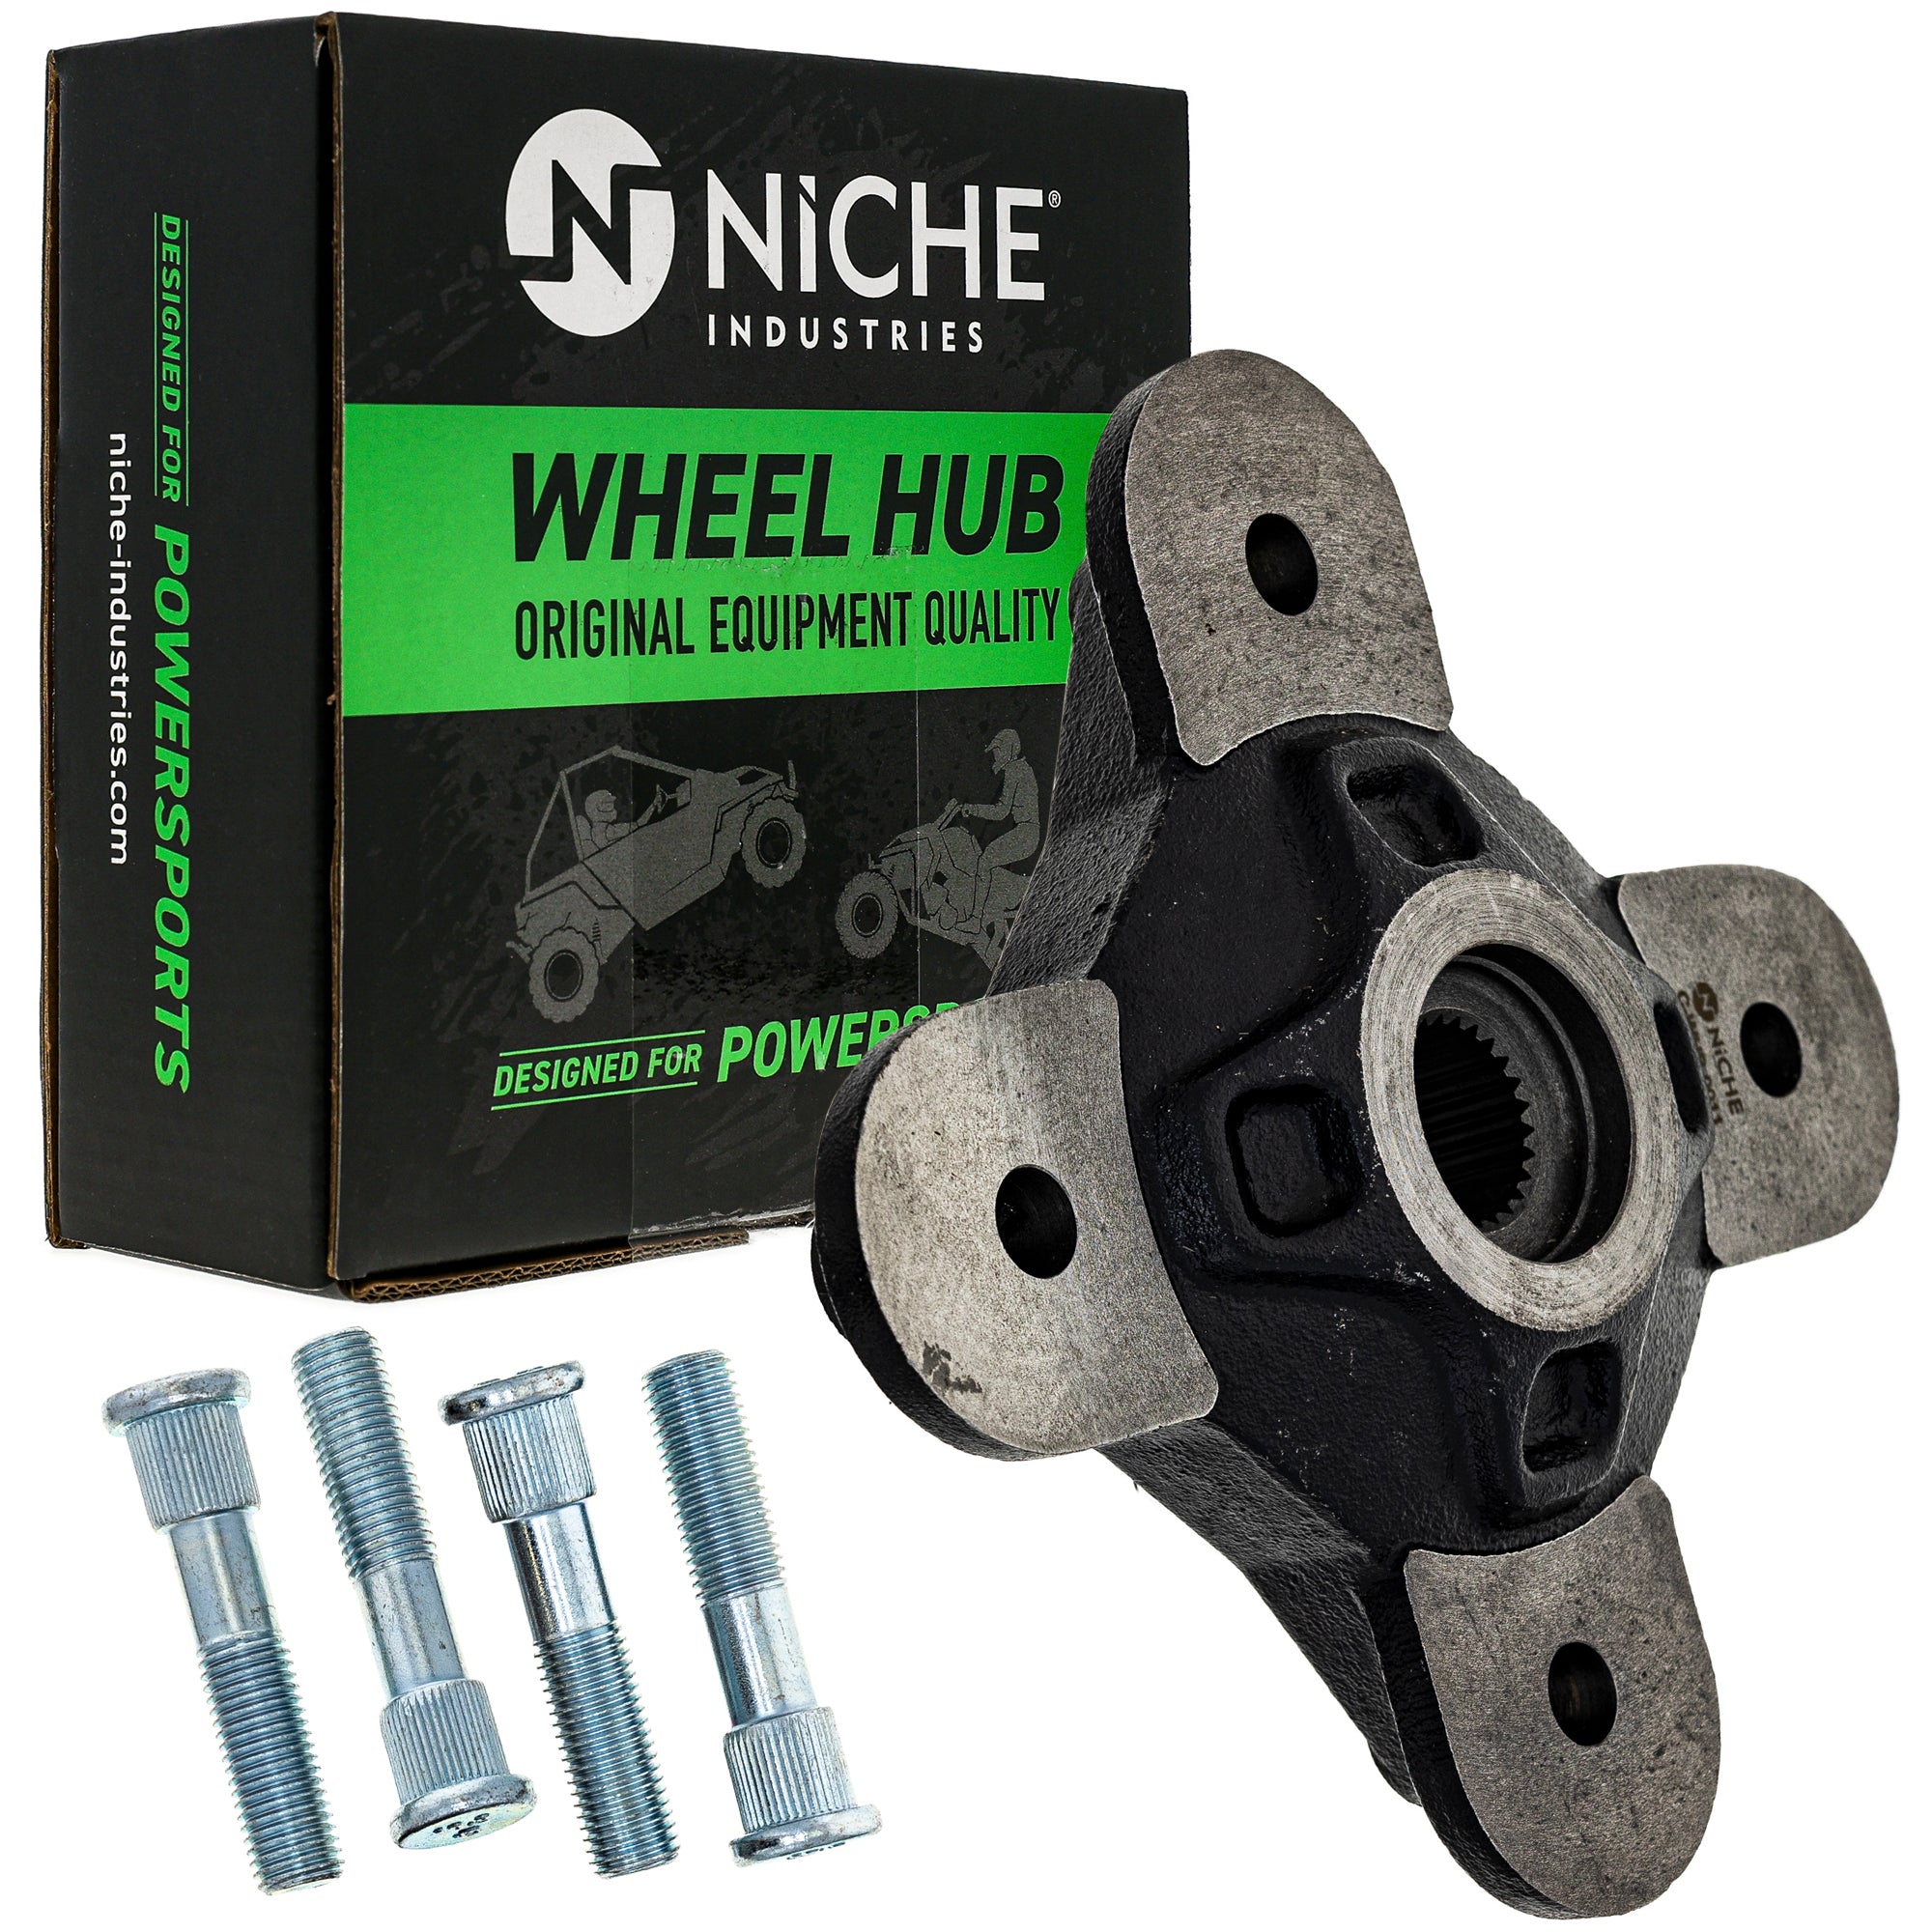 NICHE 519-CWH-2233B Wheel Hub Set 2-Pack for zOTHER Polaris RZR